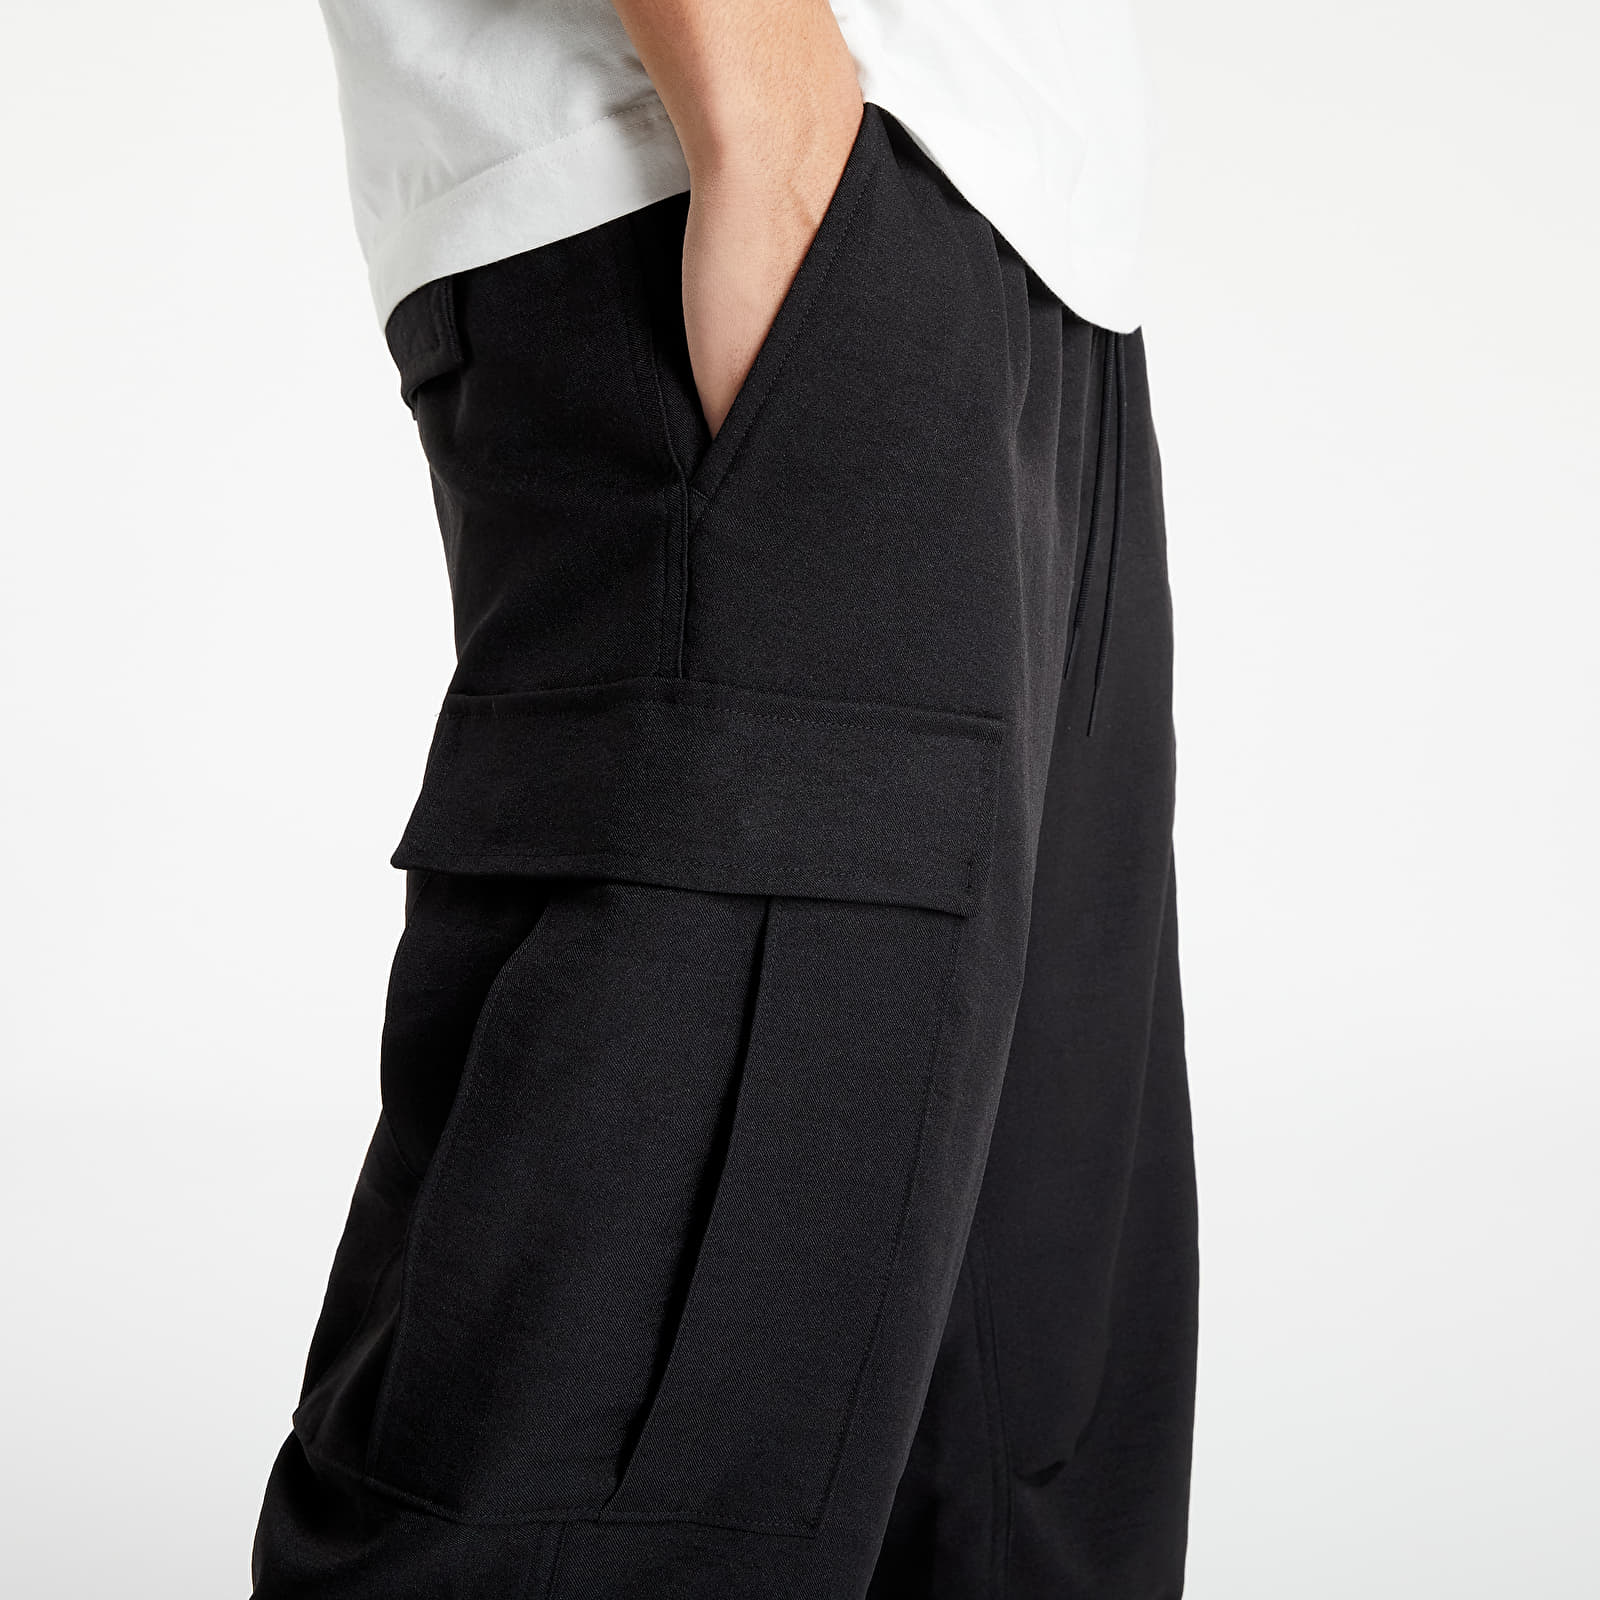 Mens' and Ladies' Black Formal Pants (M203C/W203C) – F&B Uniform